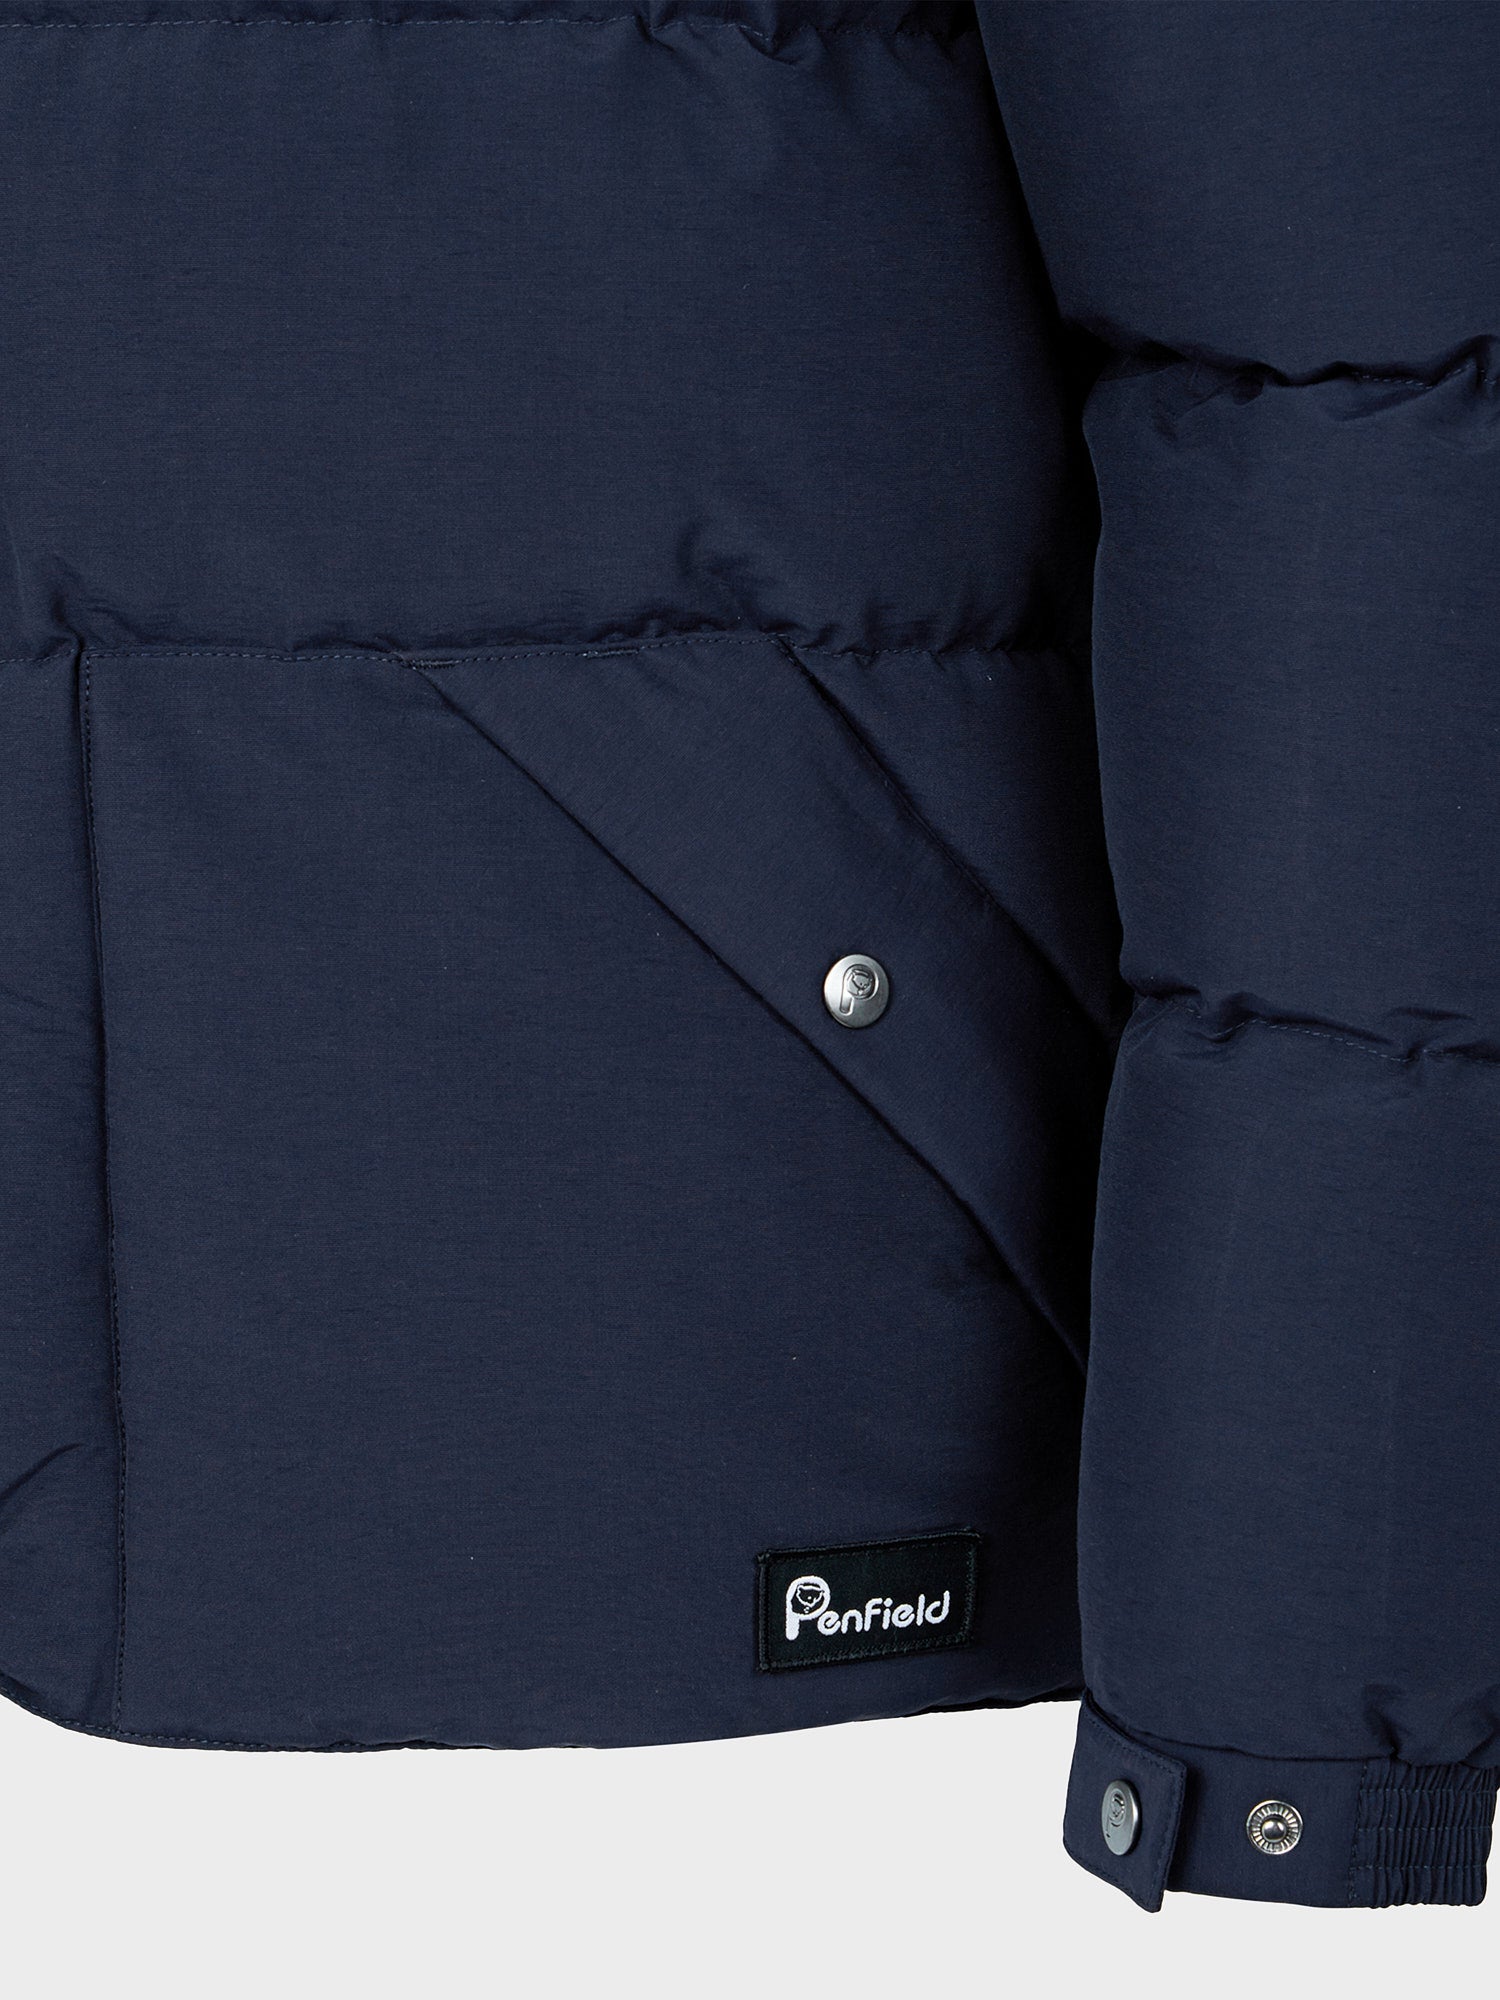 Pelam Puffer Jacket in Navy Blue